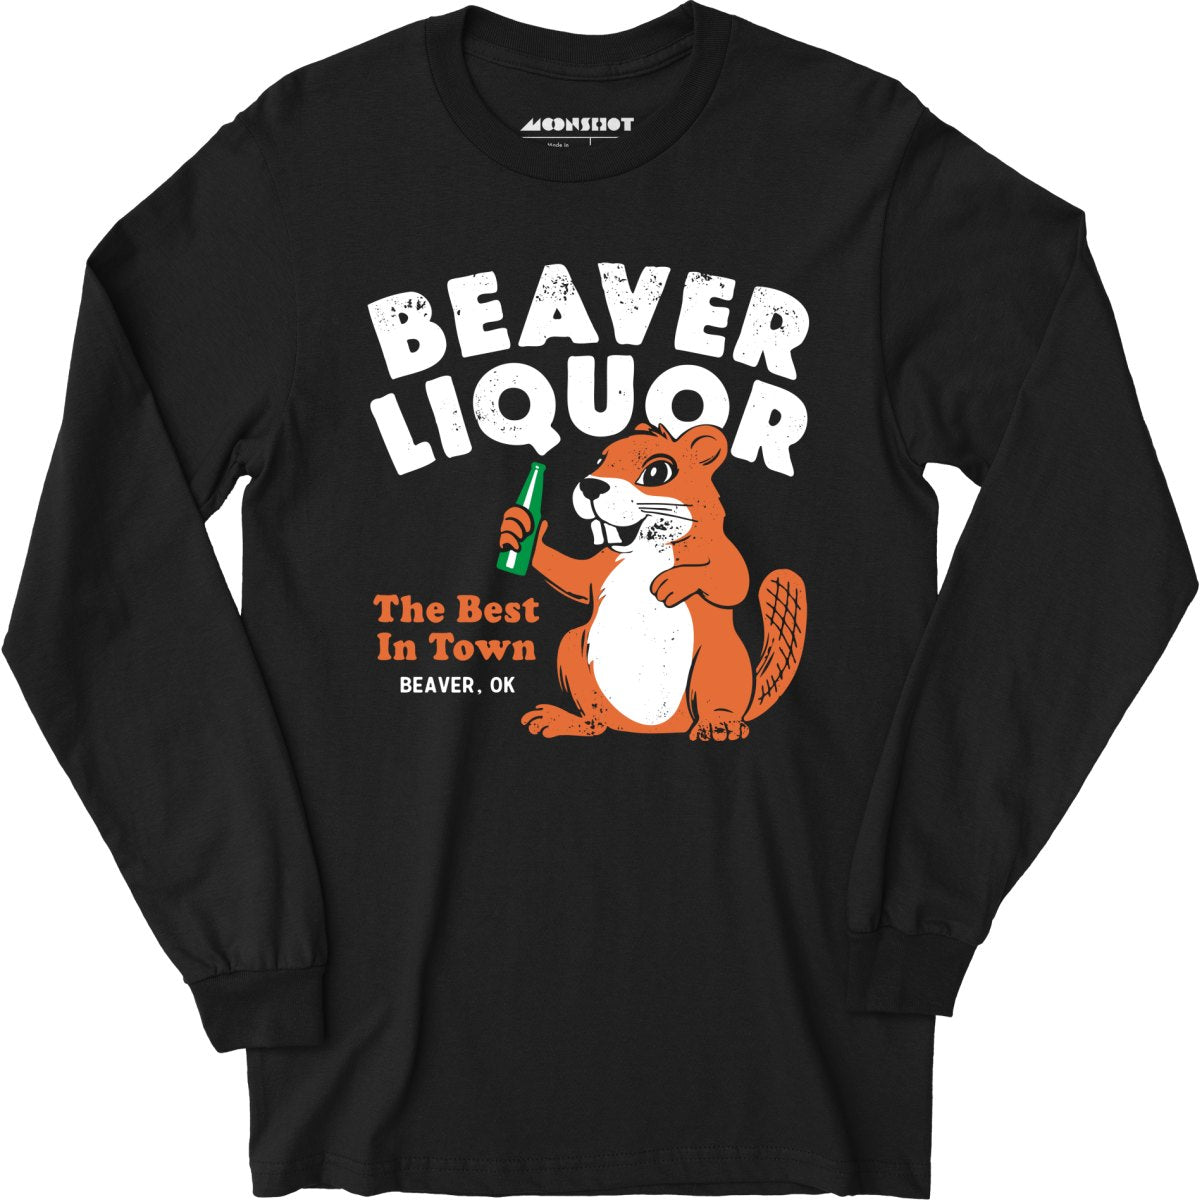 Beaver Liquor - Long Sleeve T-Shirt